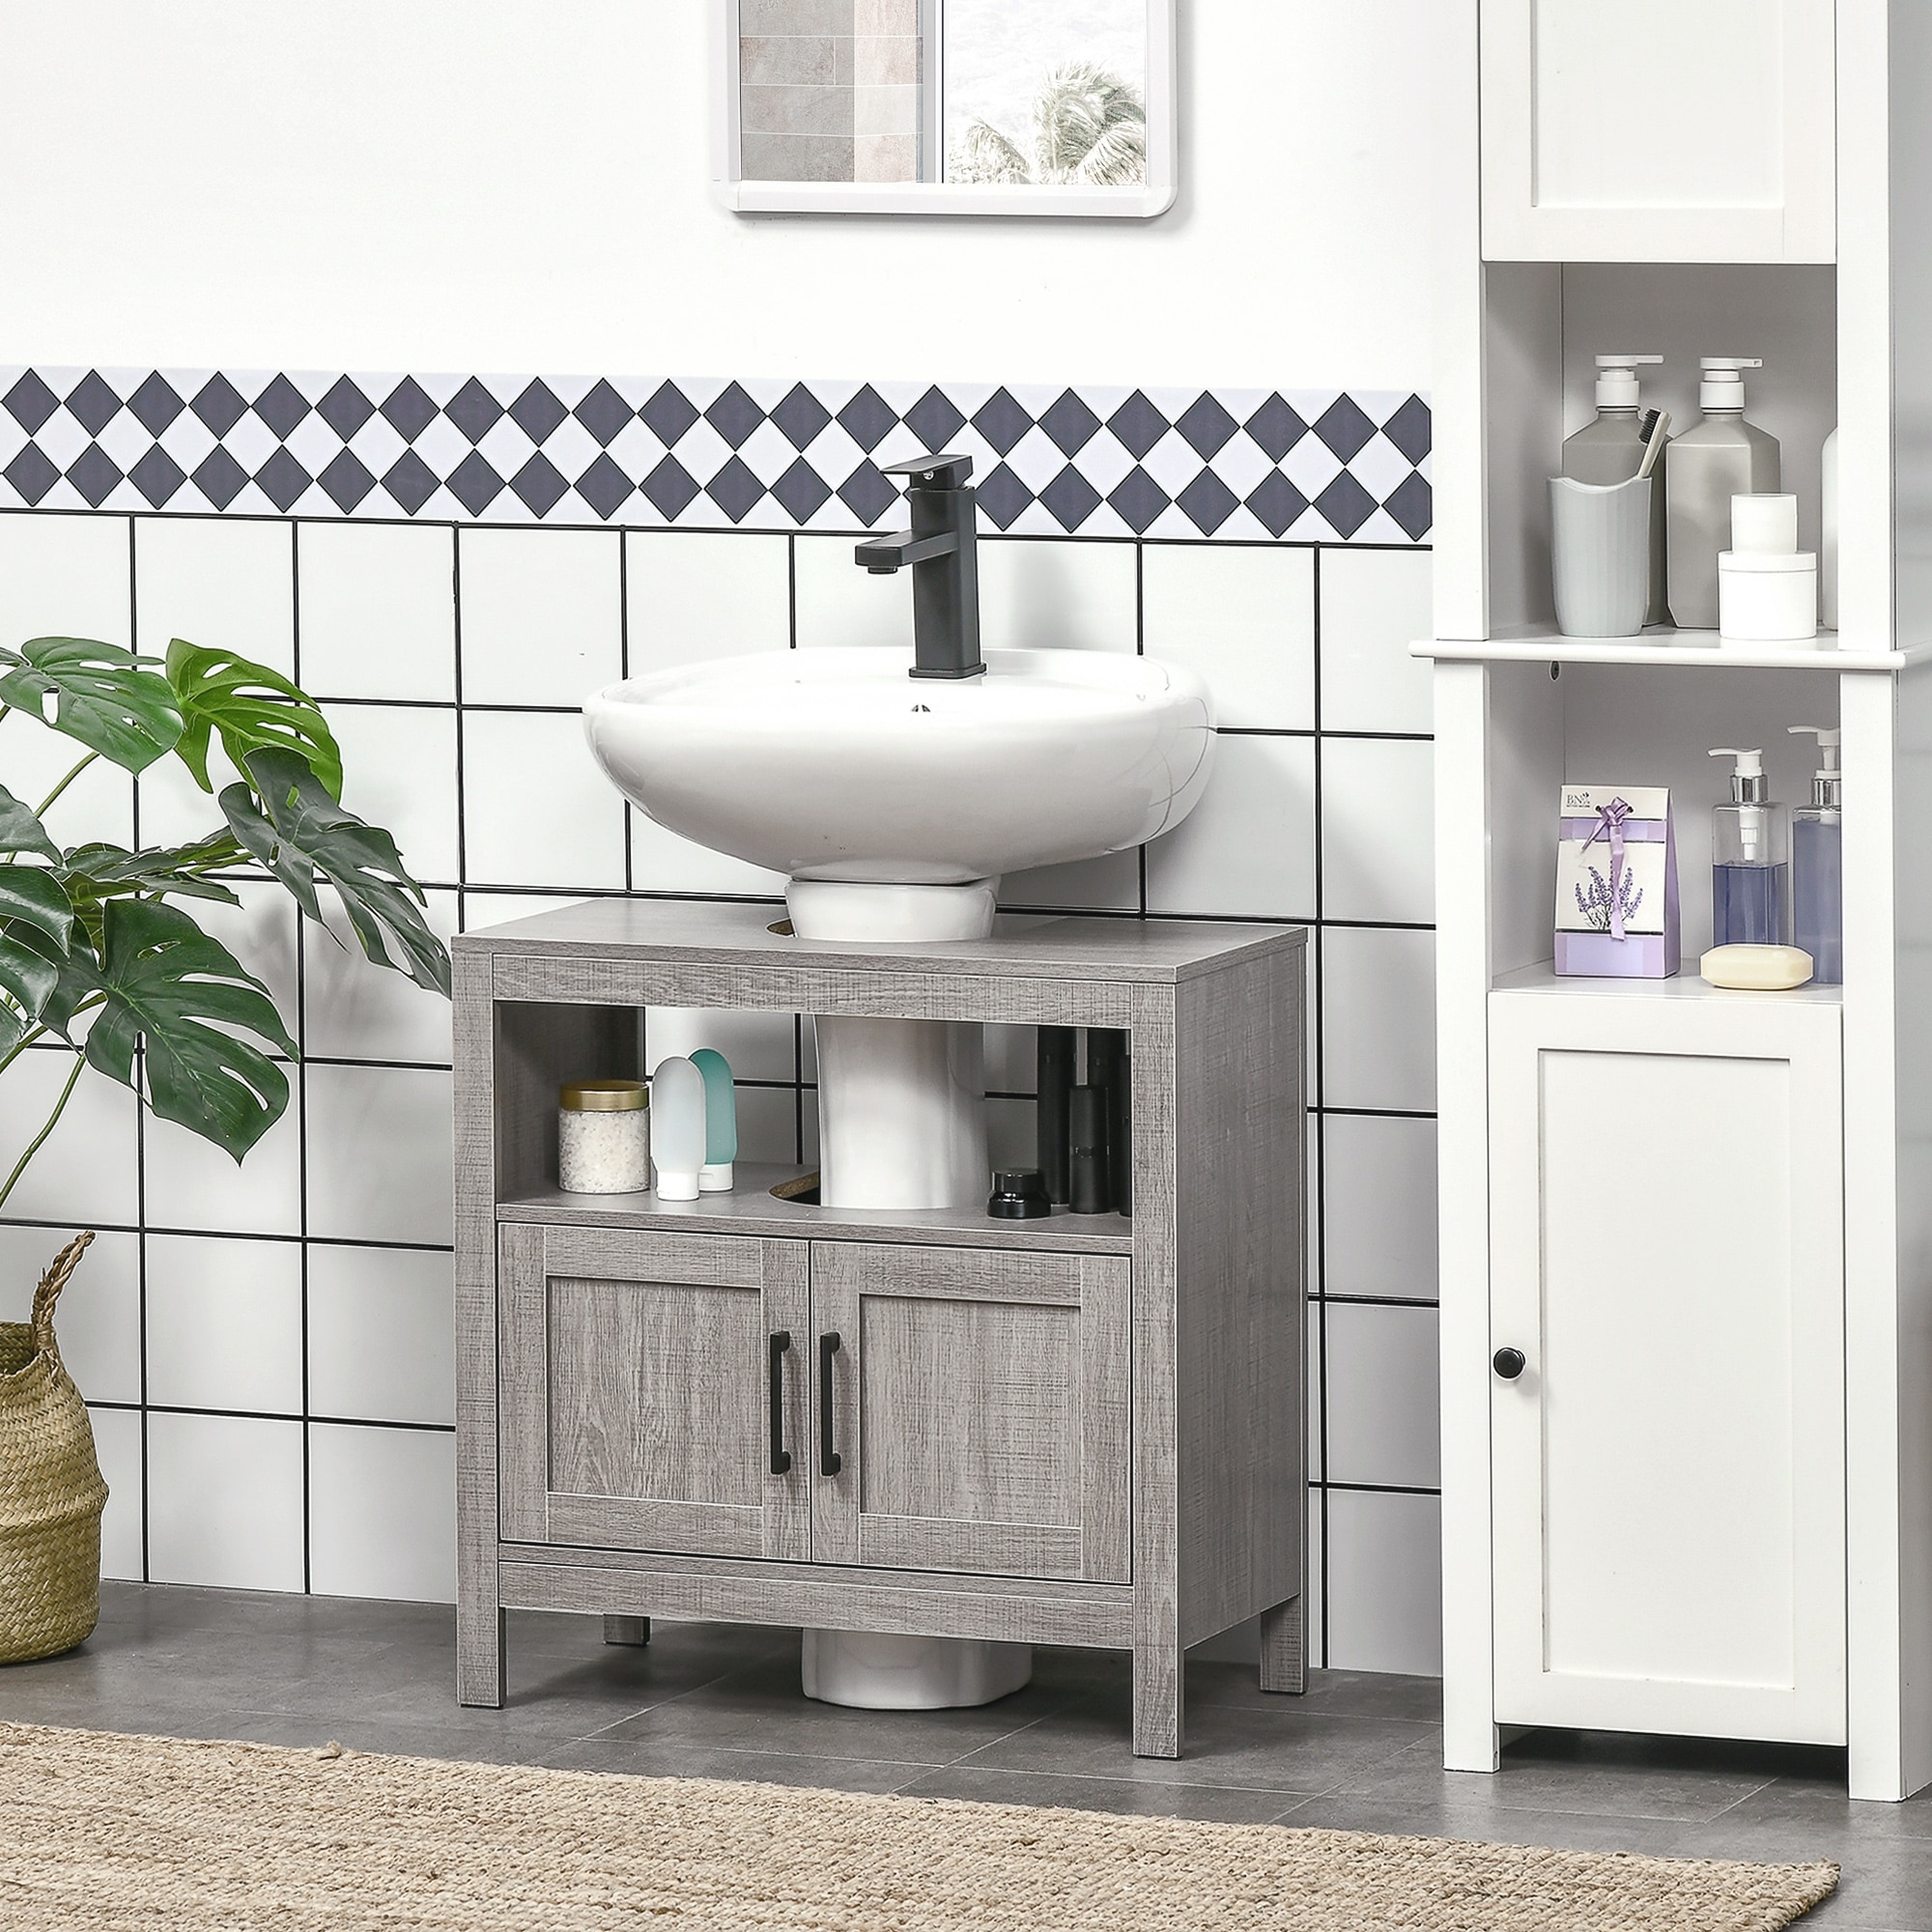 https://ak1.ostkcdn.com/images/products/is/images/direct/7eef9dd26f9d1fc0ef505944cf7d6ba120f28a12/Modern-Bathroom-Vanity-Pedestal-Sink-Storage-Cabinet-Bathroom-Under-Sink-Cabinet-with-2-Doors-and-Open-Shelf-Paper-Cabinet%2C-Gray.jpg